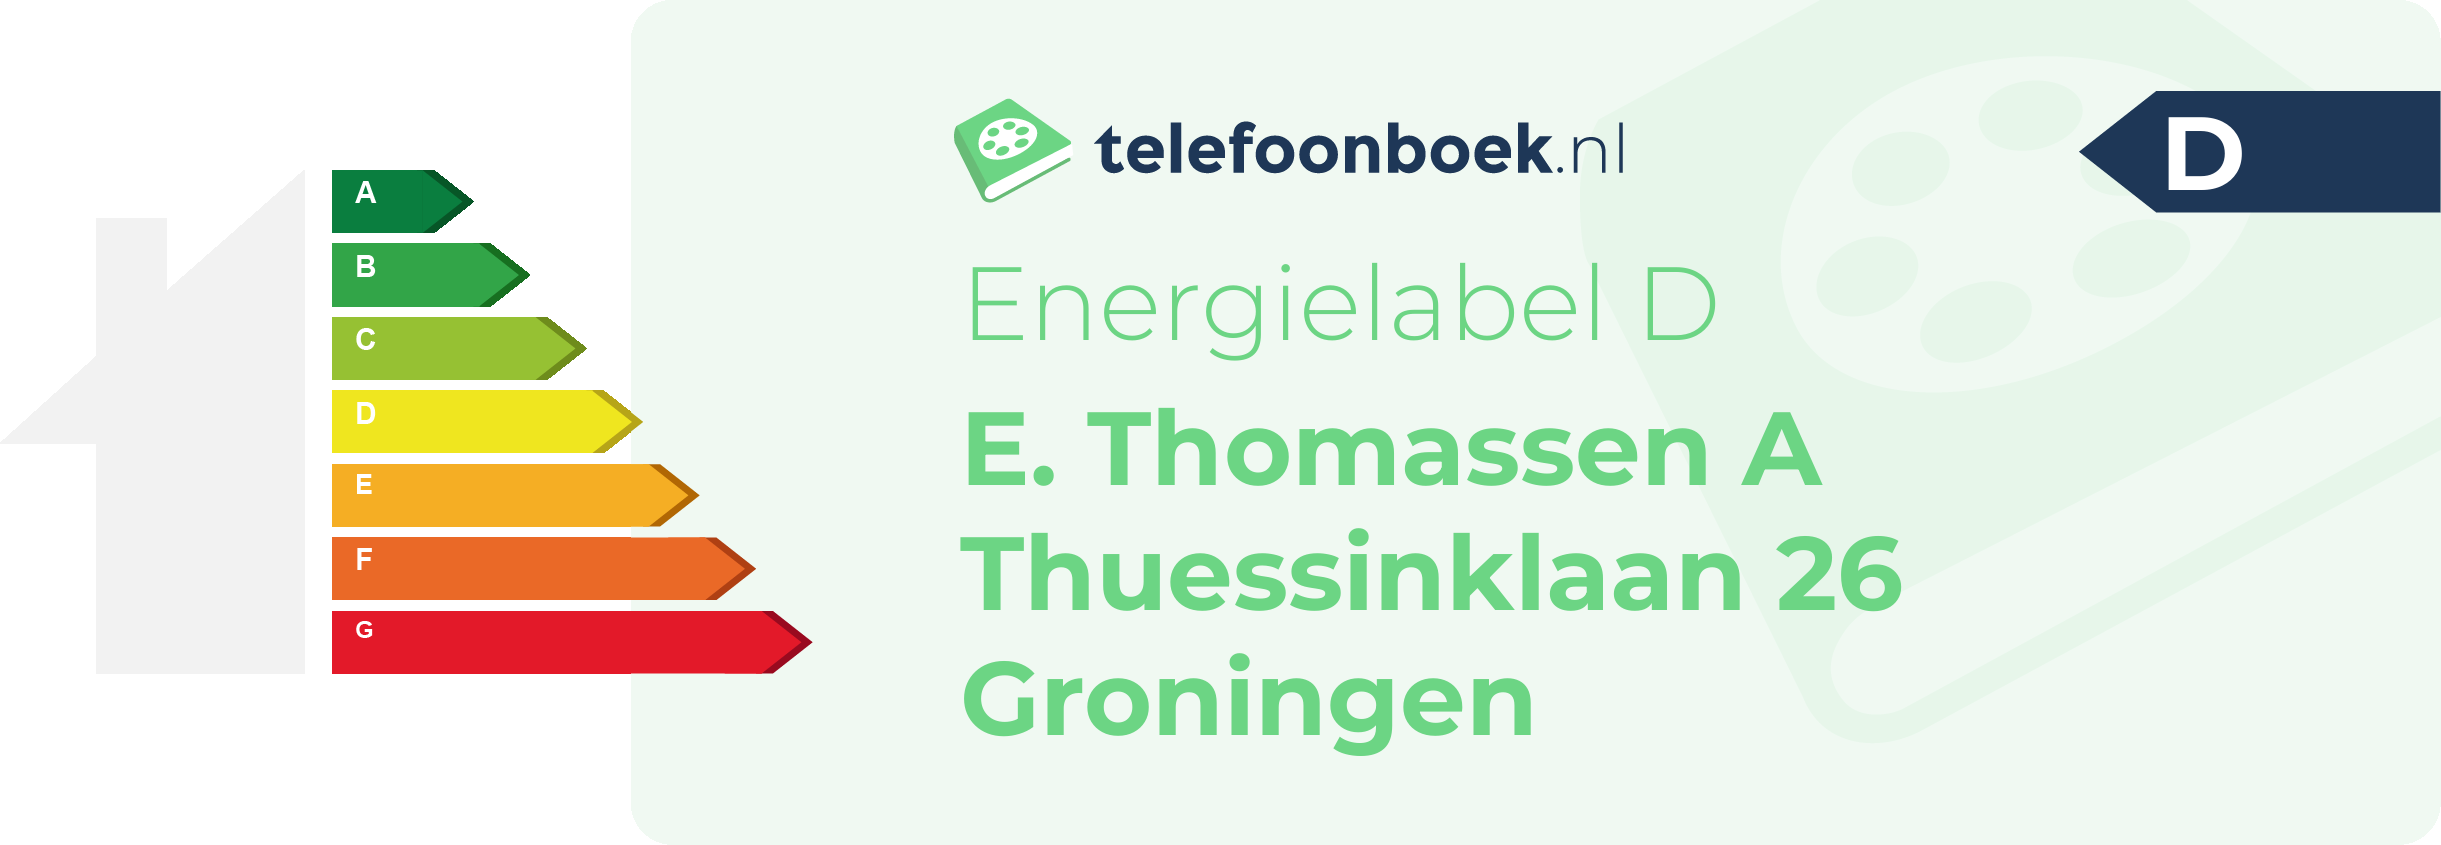 Energielabel E. Thomassen A Thuessinklaan 26 Groningen